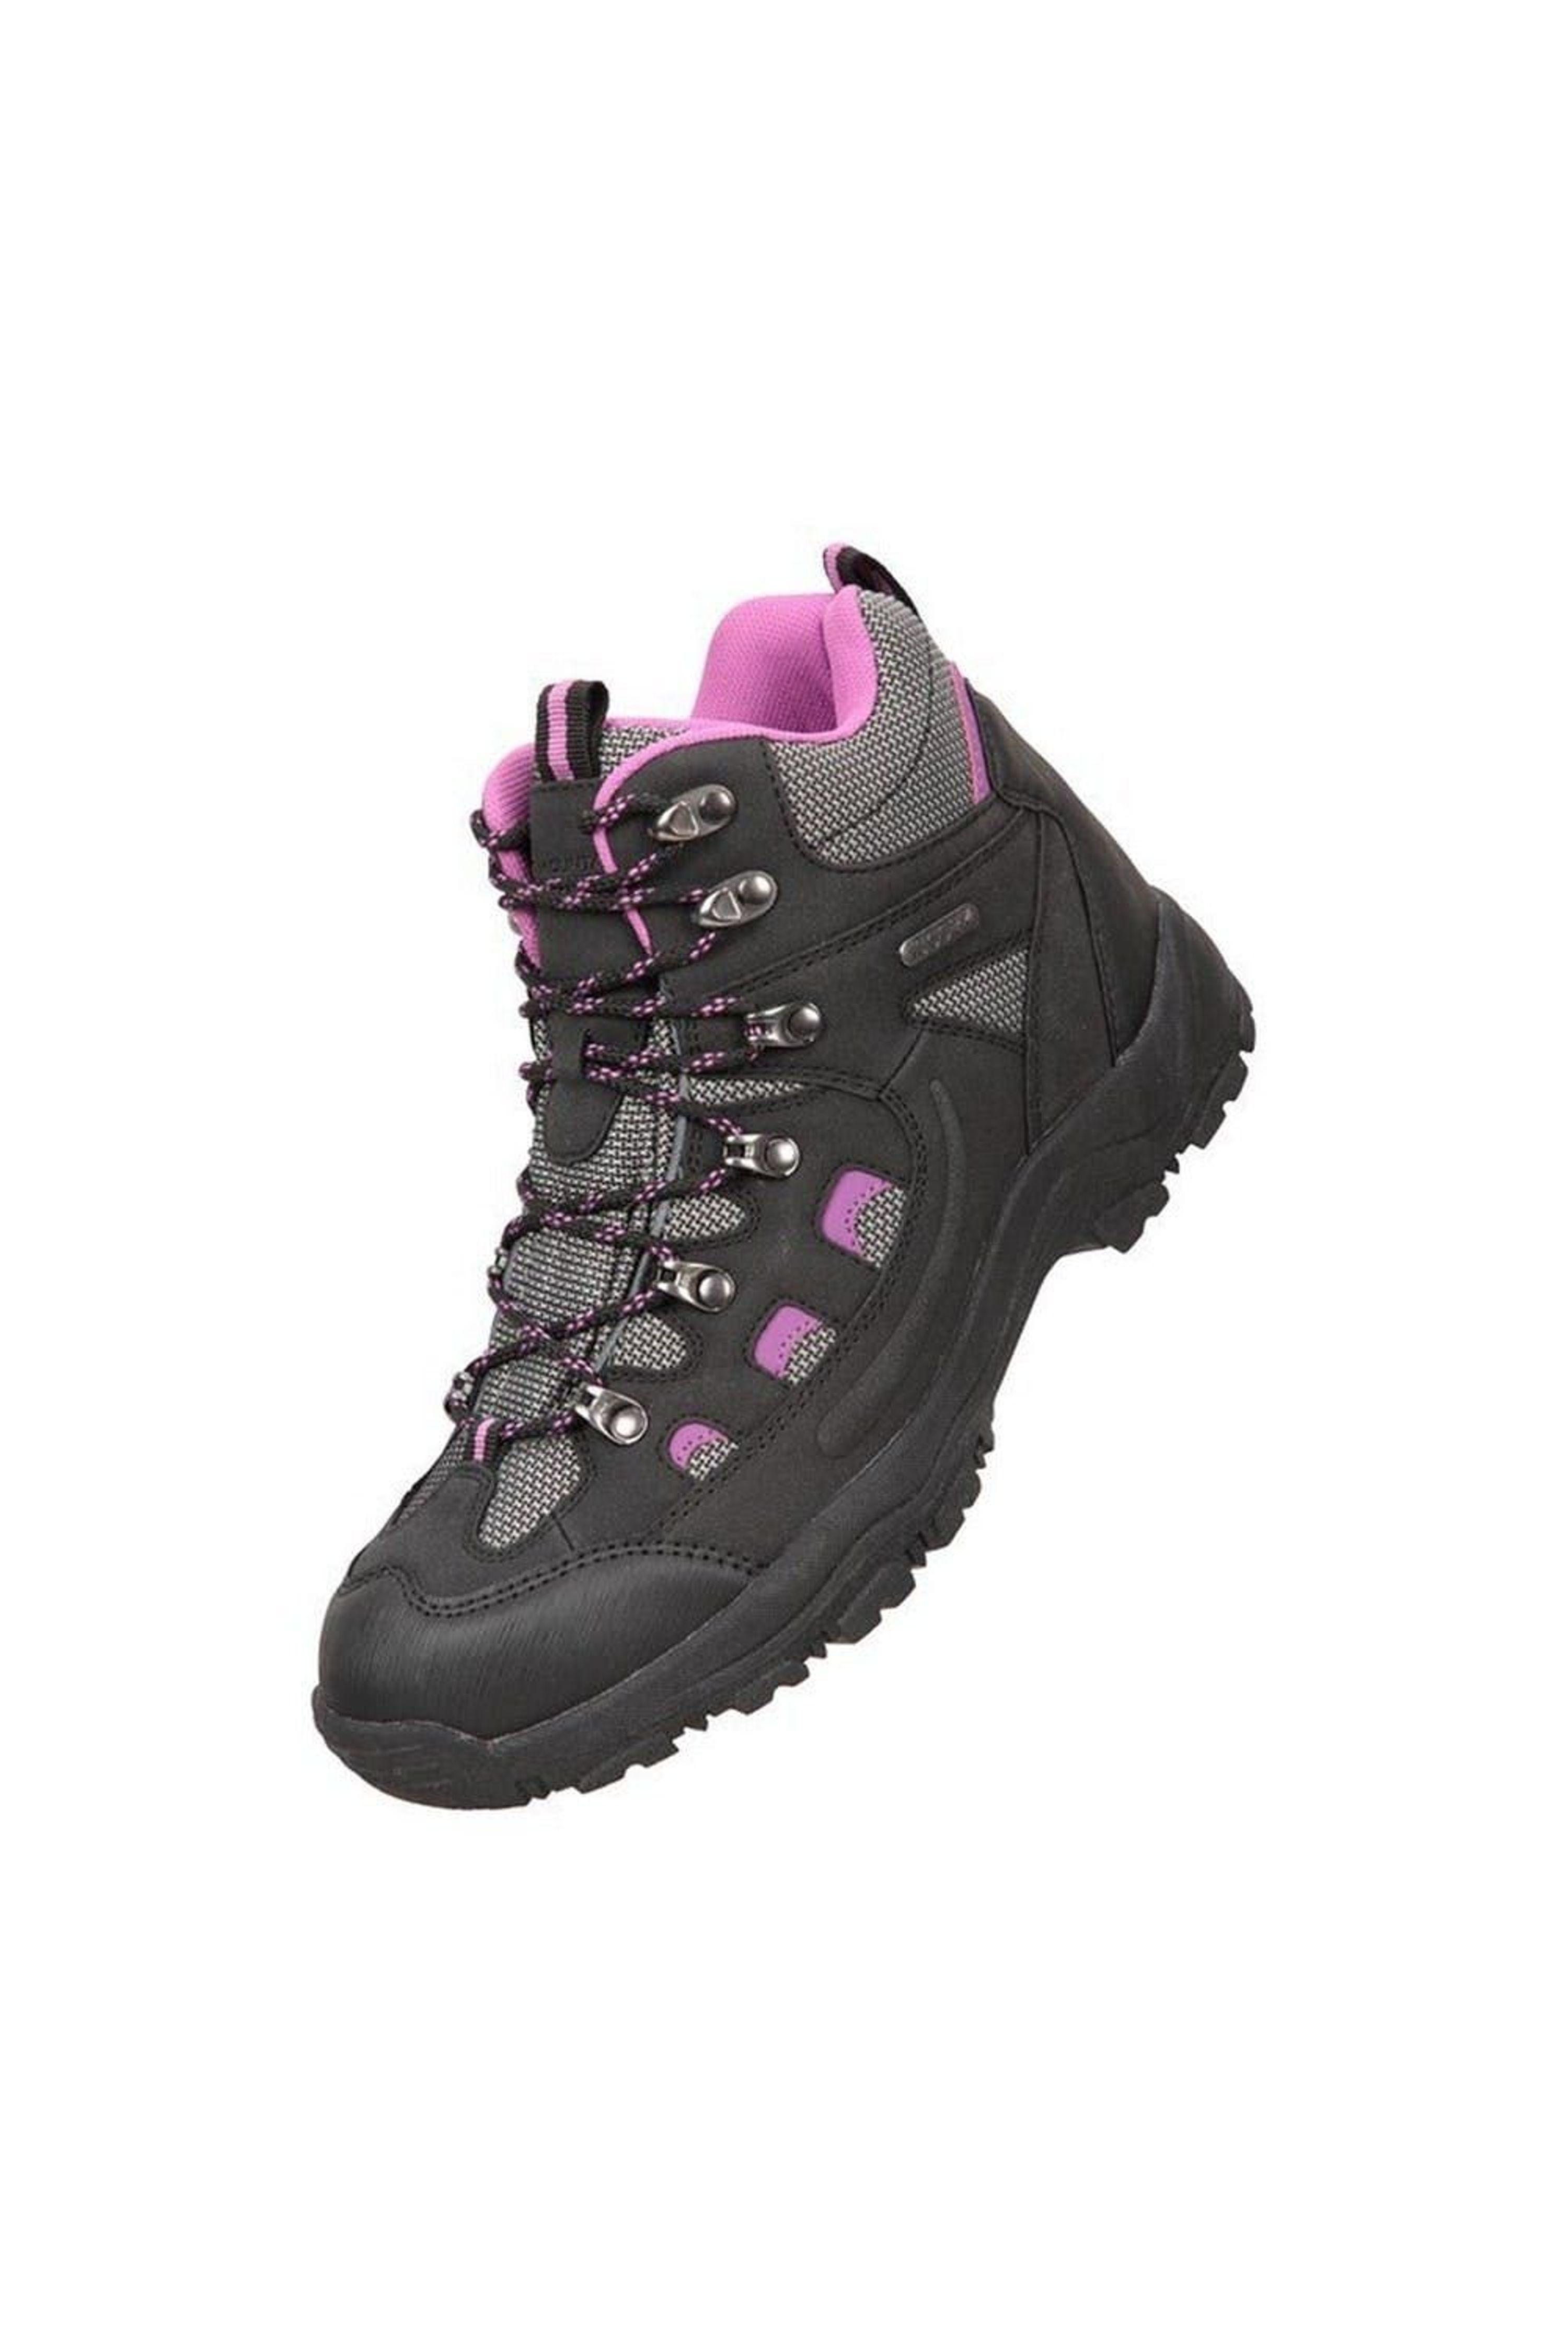 Mountain Warehouse Adventurer Walking Boots In Black Lyst | atelier ...